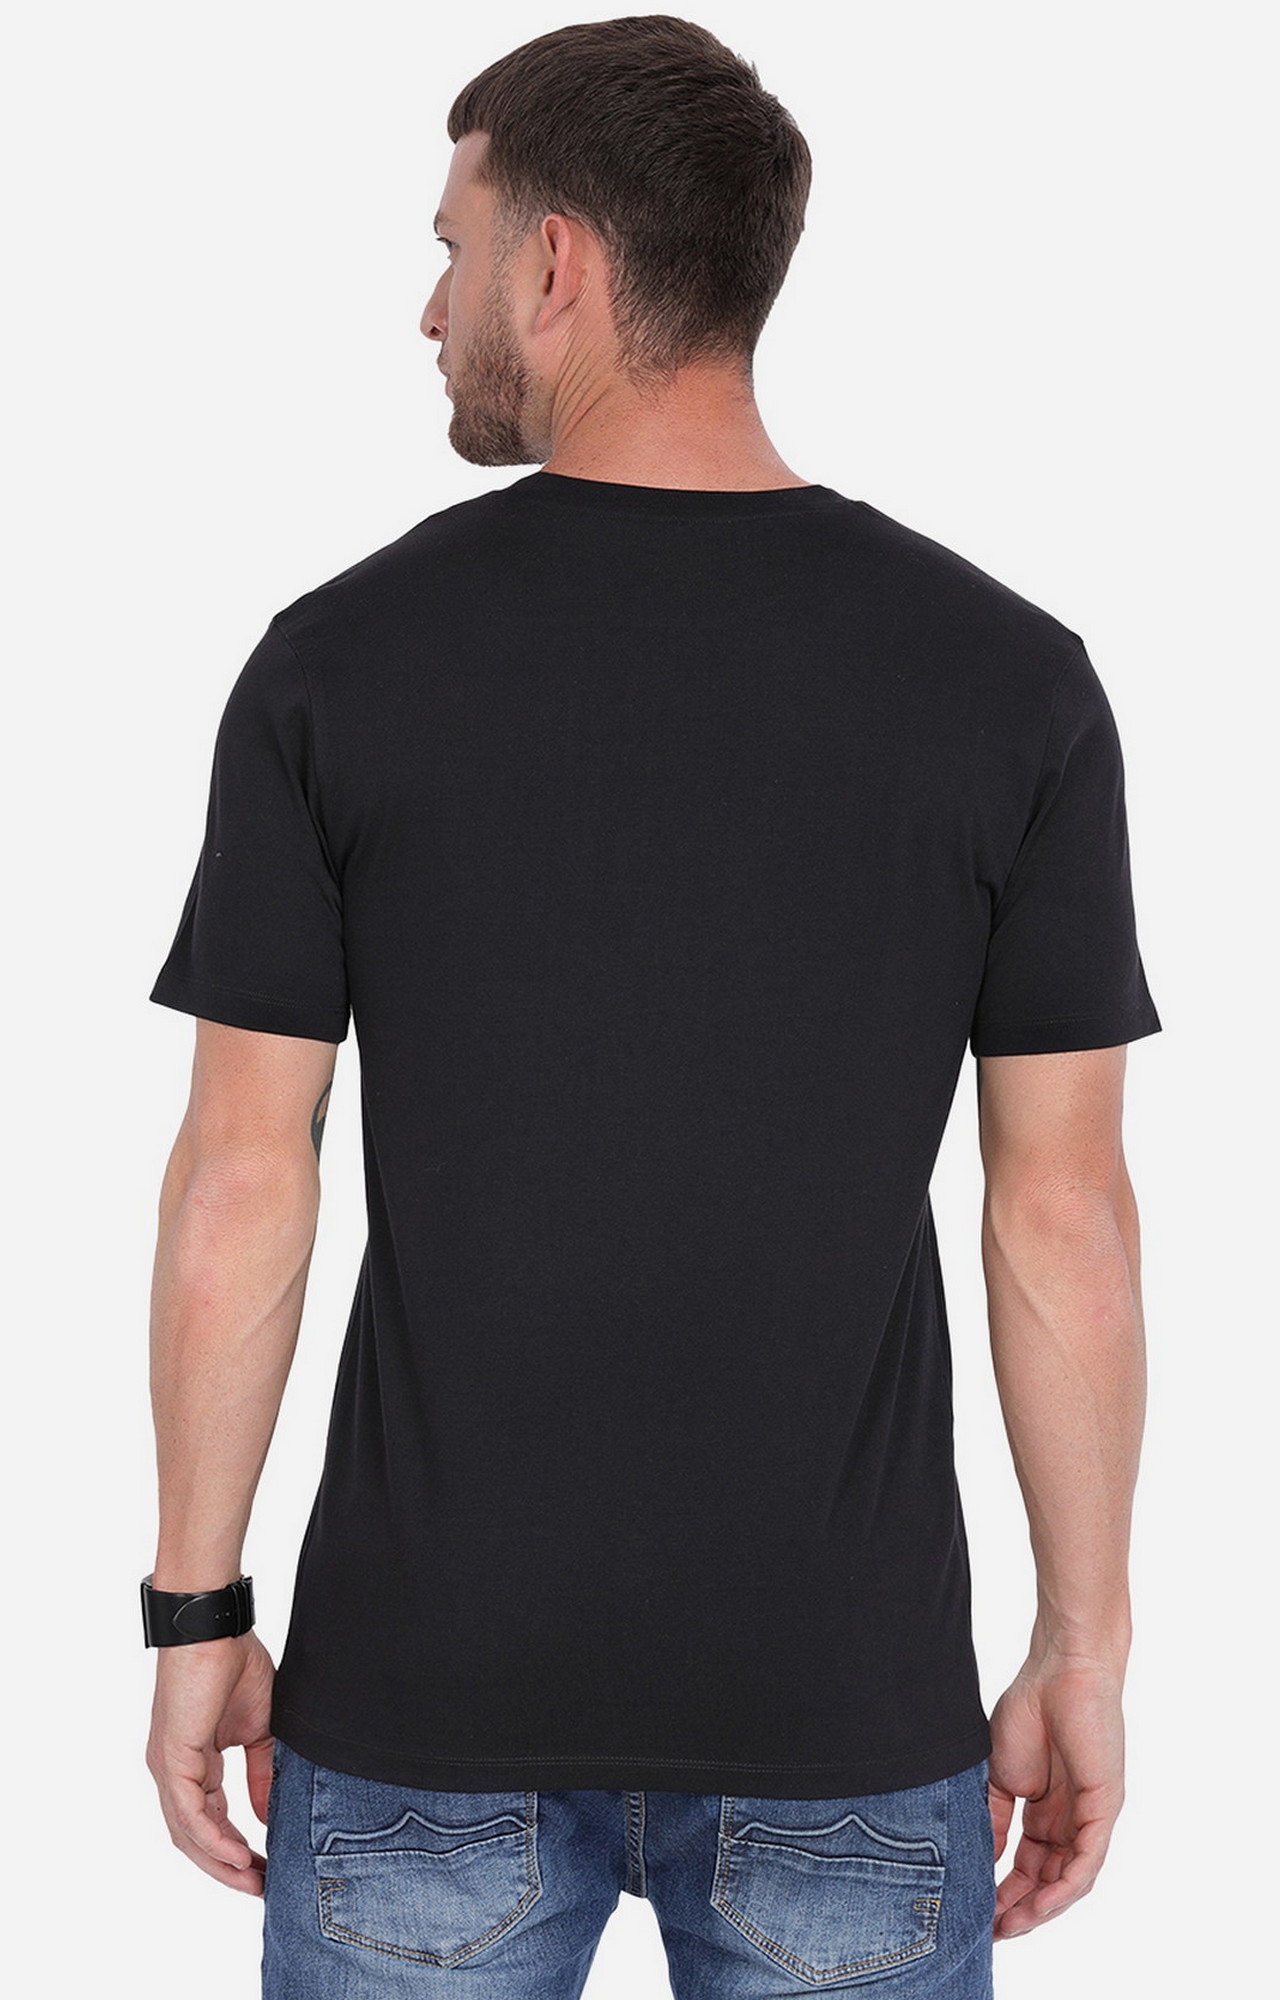 883 Police | Men's Black Cotton Typographic Printed T-Shirt 5